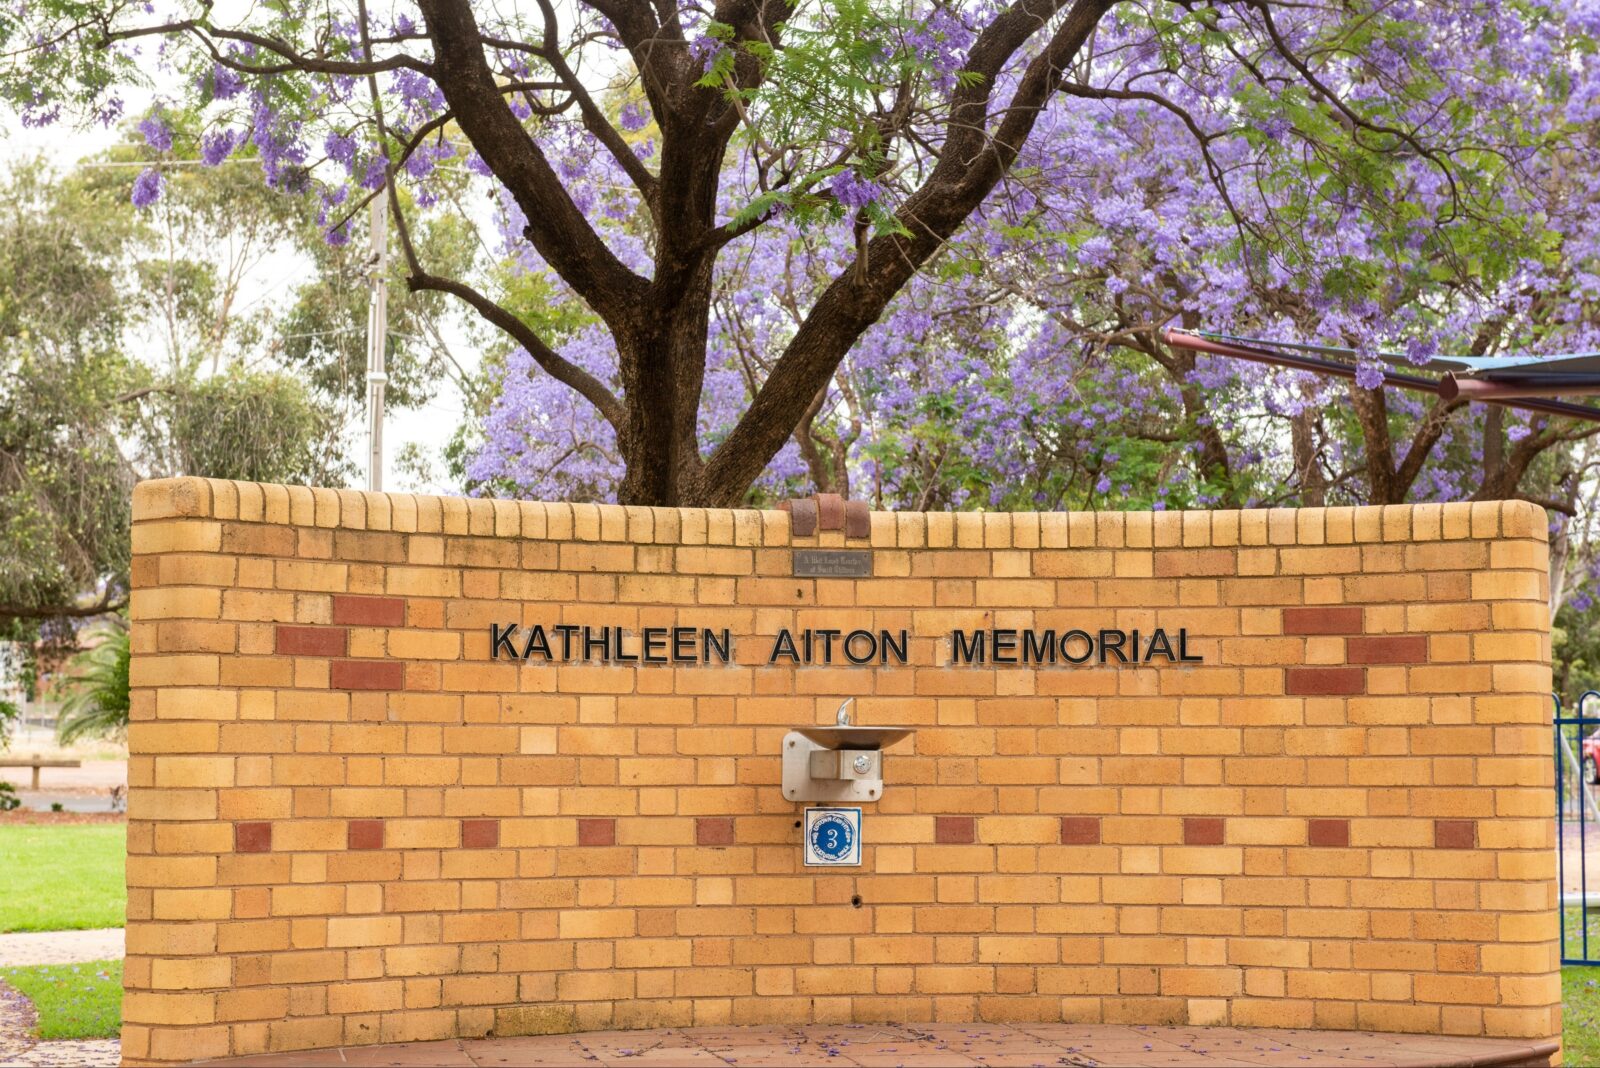 Kathleen Aiton Memorial, well oved teacher.